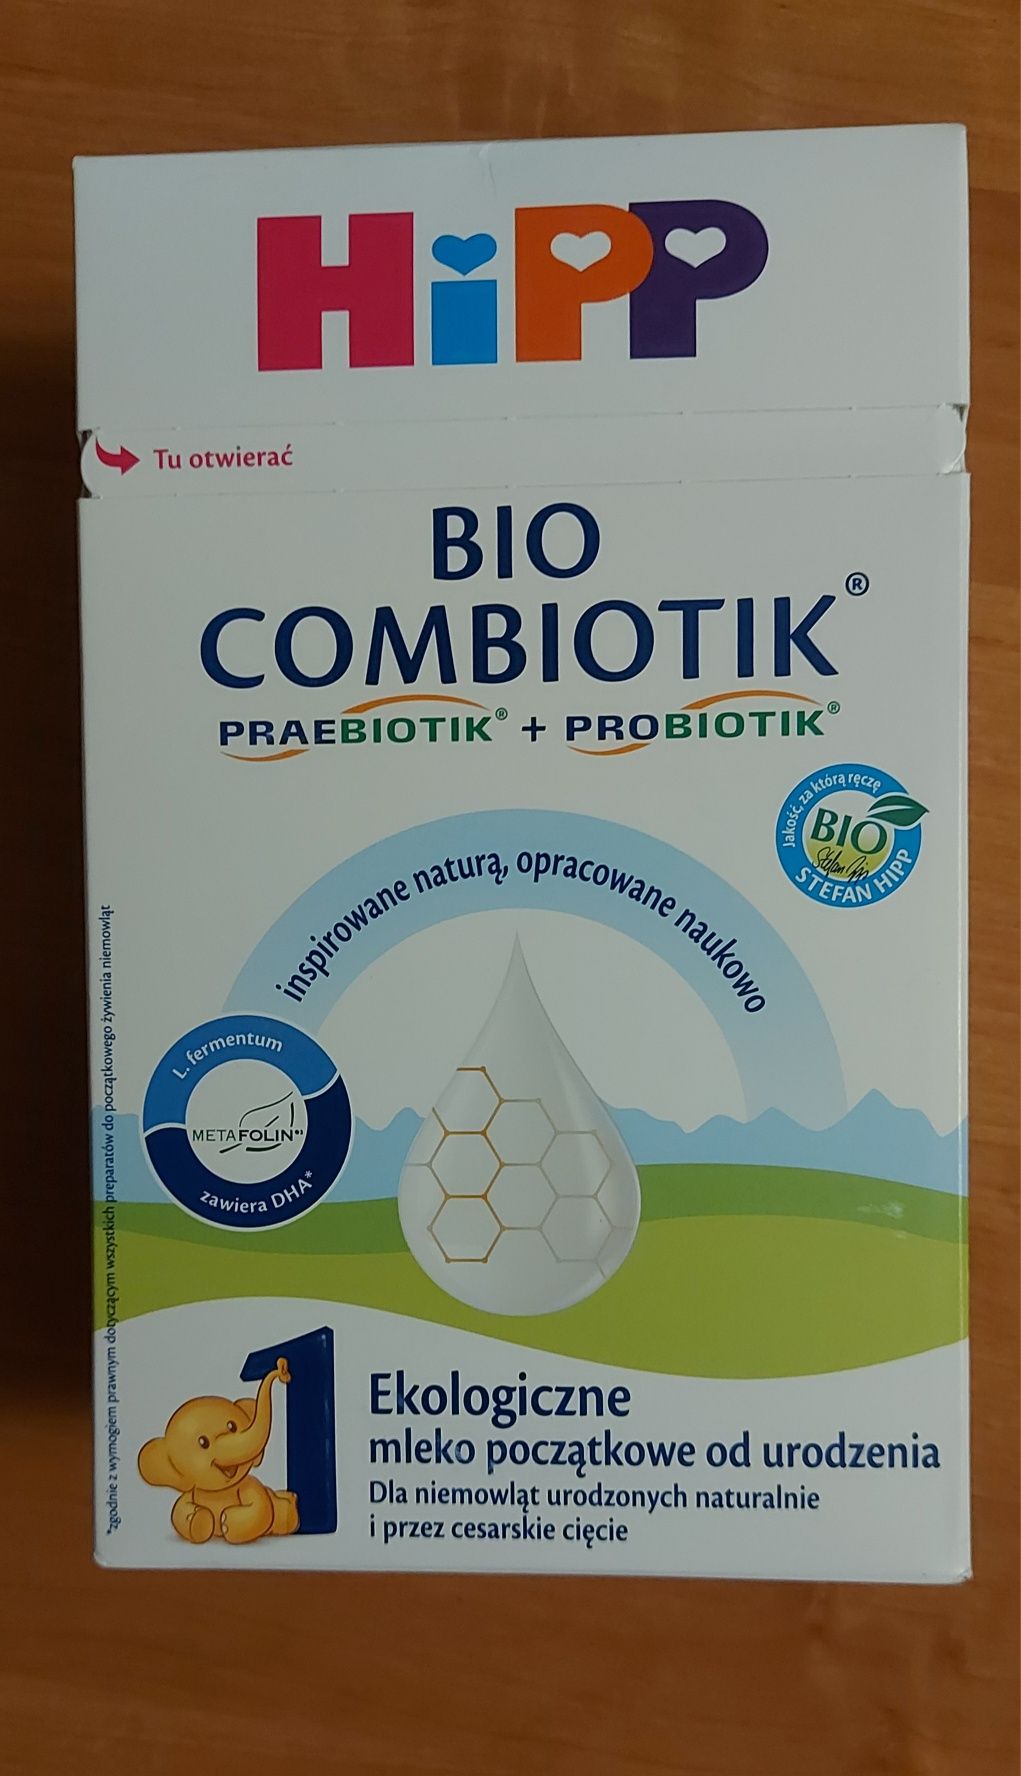 Суміш Ніpp Bio Combiotik 1 - 550 гр. (Польща)